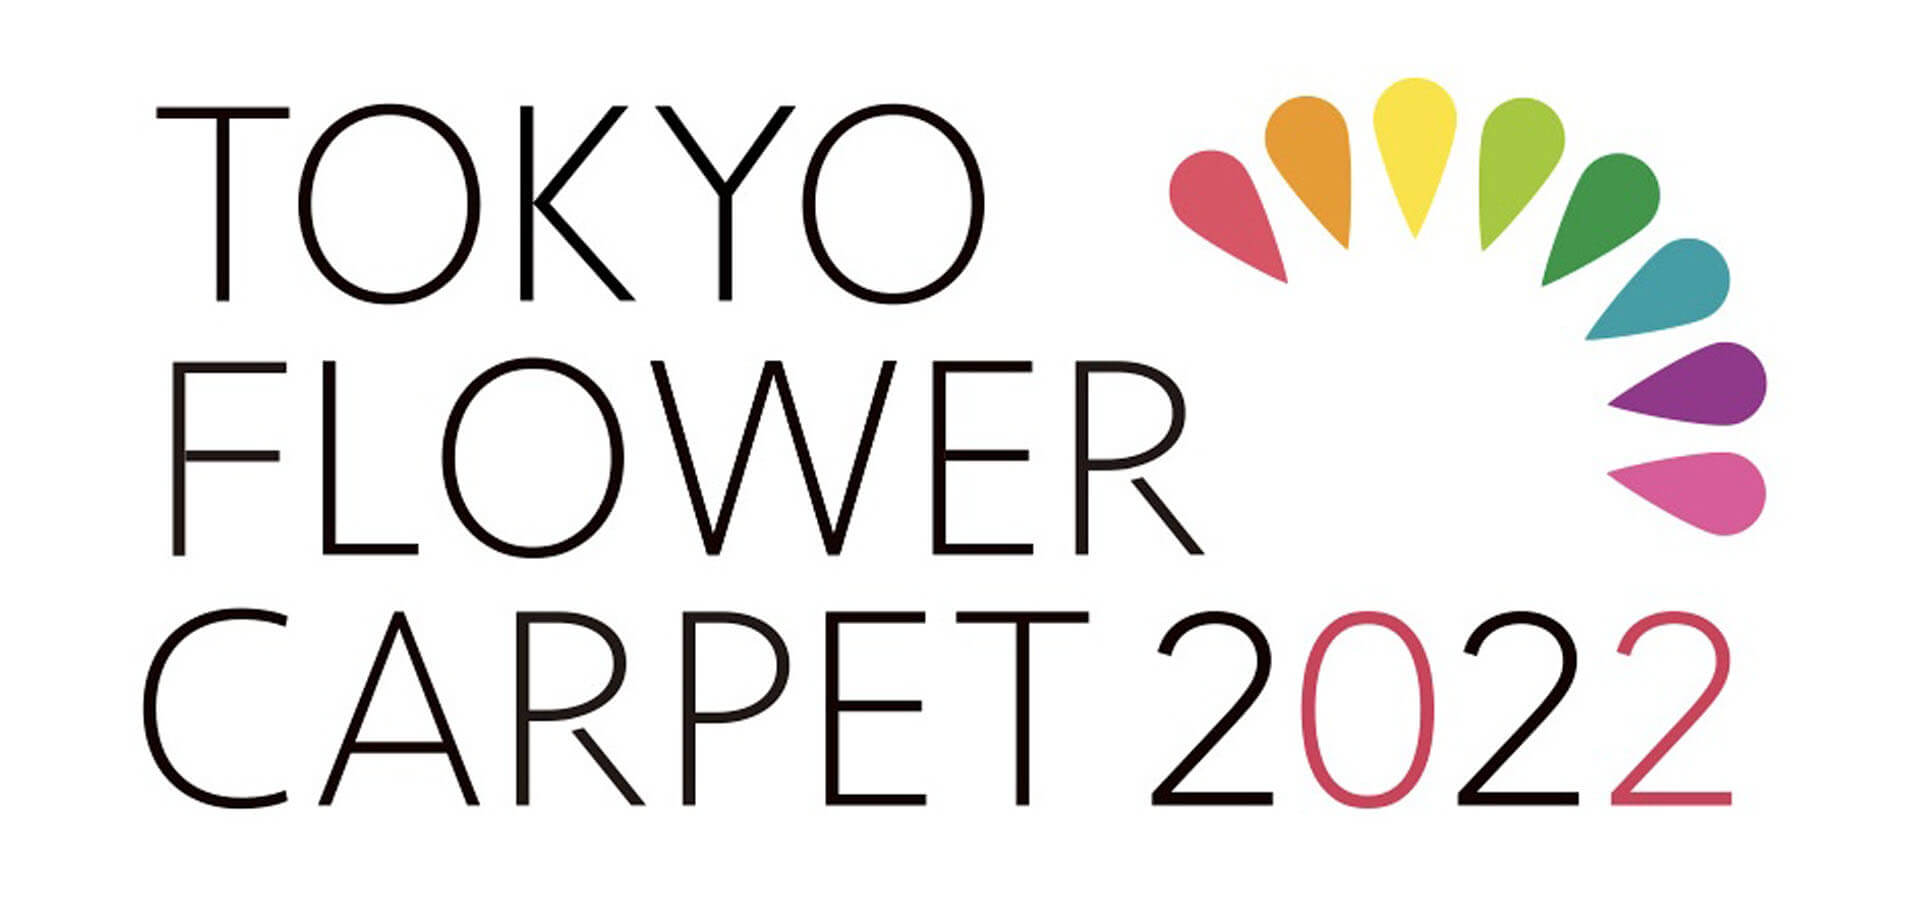 TOKYO FLOWER CARPET 2022